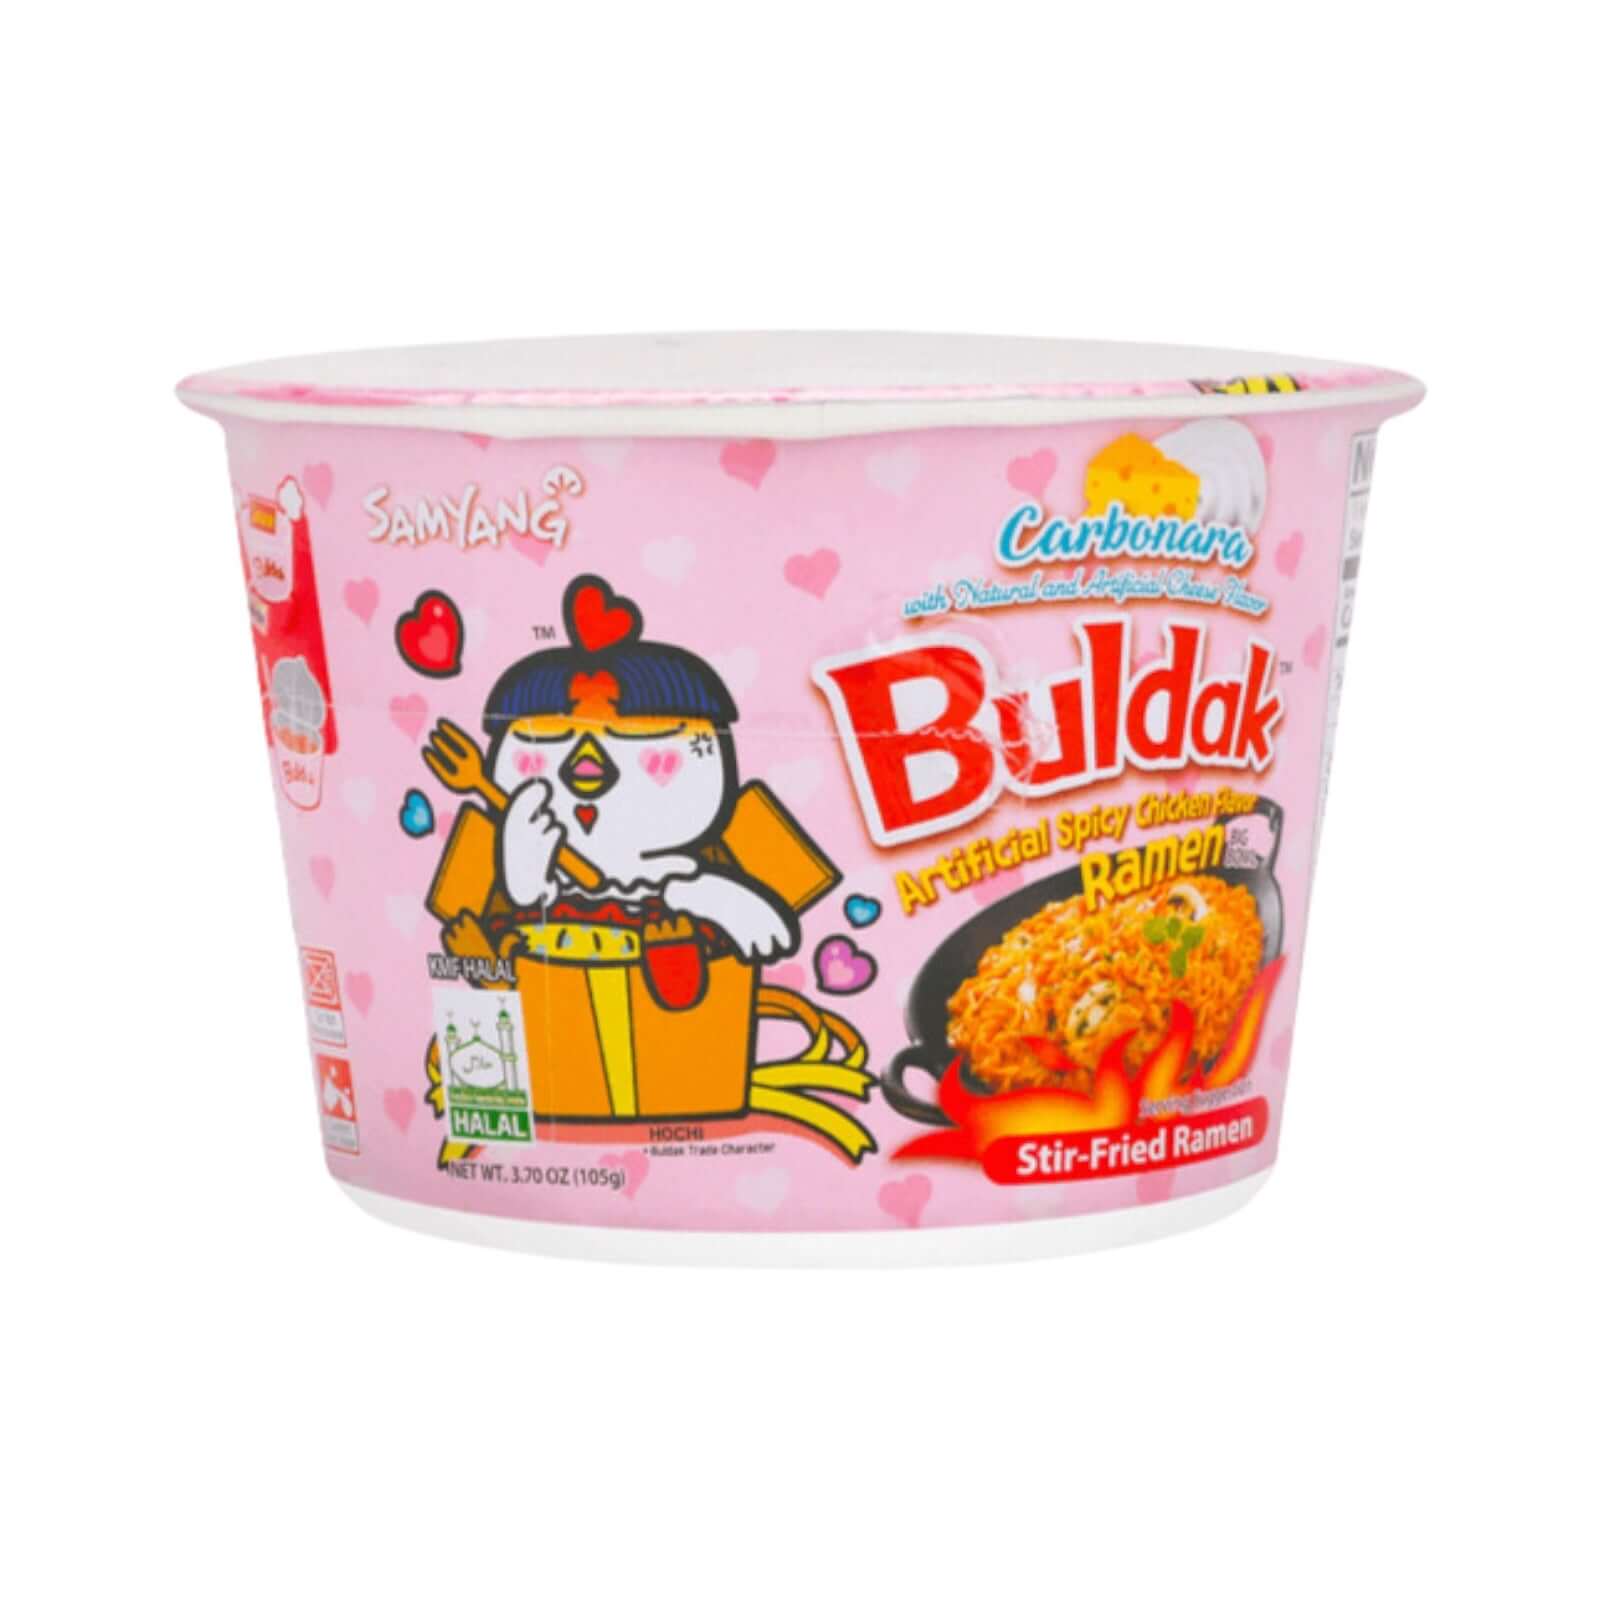 Buldak Carbonara Ramen – JoJo's Candy